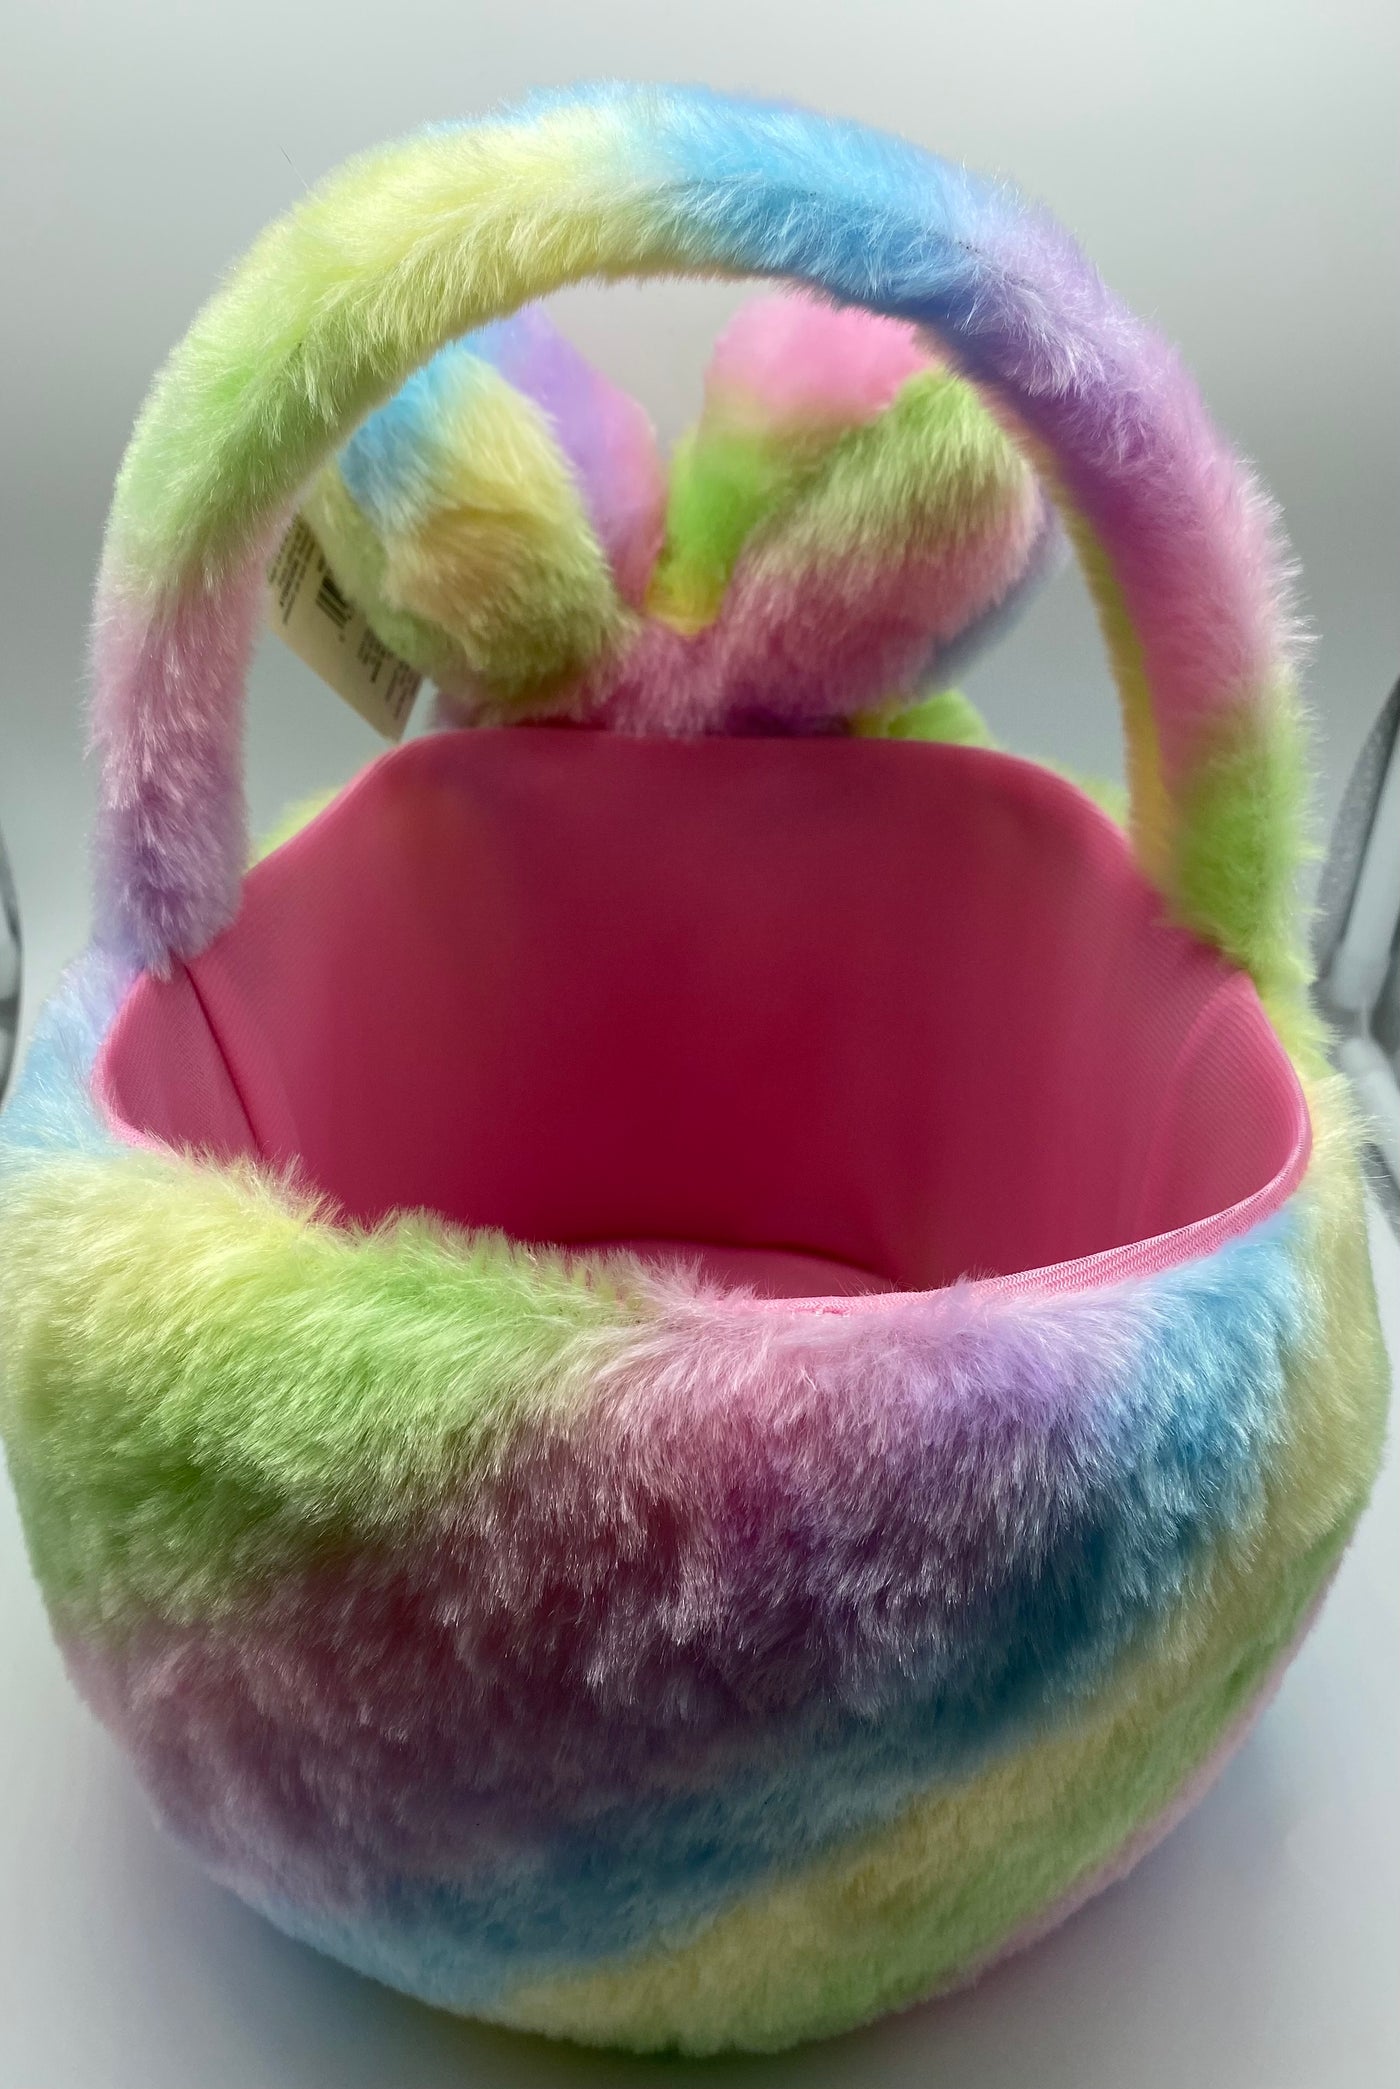 Peeps Easter Peep Tie Dye Bunny Rainbow Basket Plush New with Tag